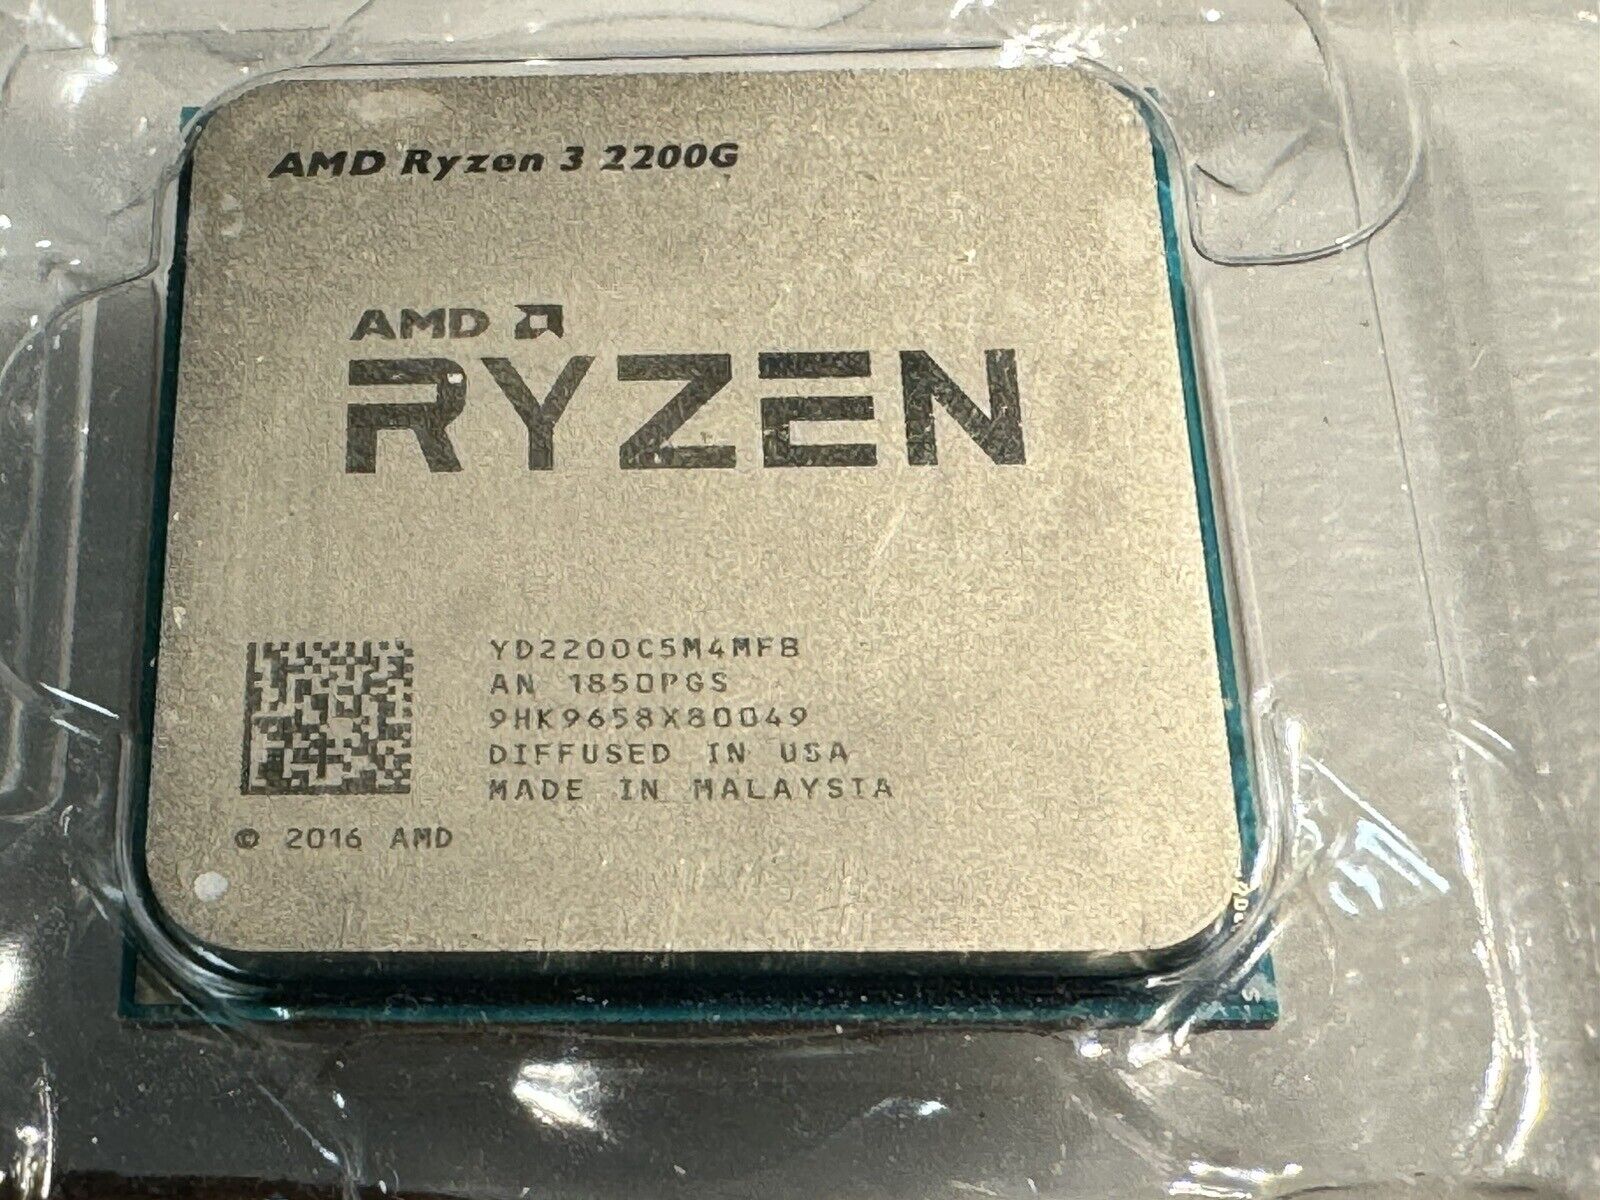 READ DESC — AMD Ryzen 3 2200G 3.5GHz/3.7GHz Boost AM4 CPU (YD2200C5M4MFB)